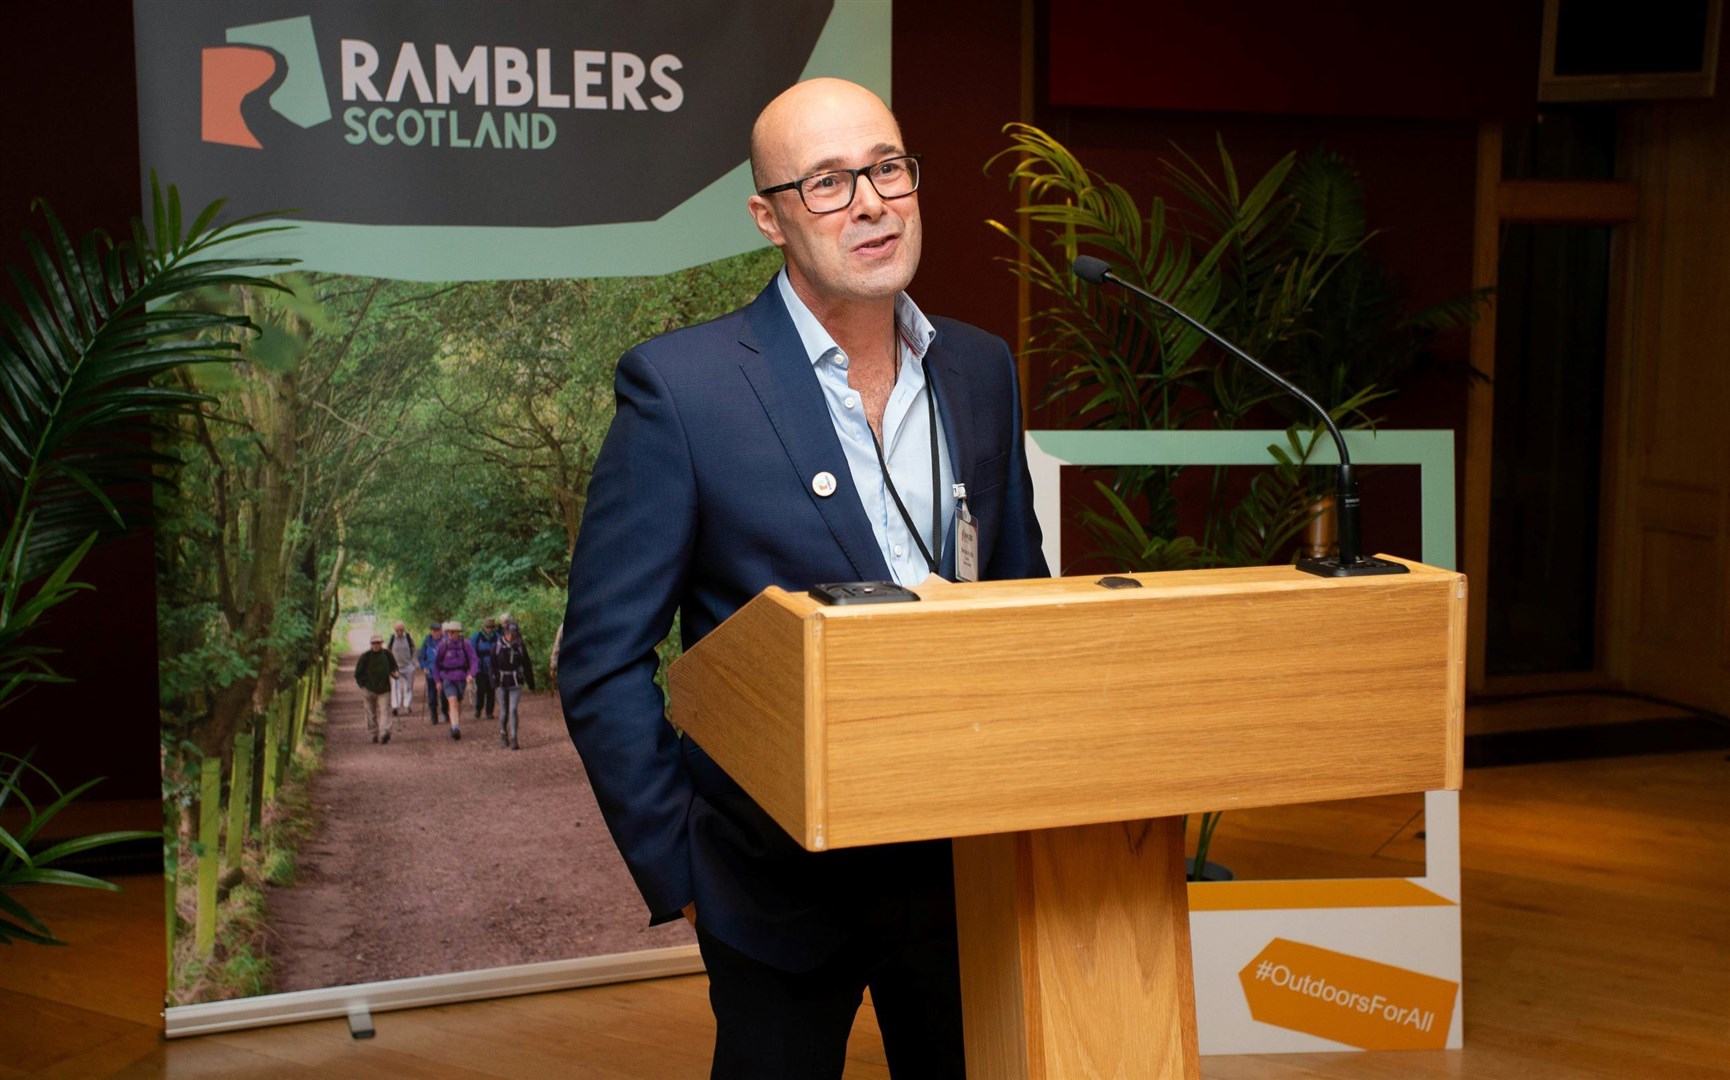 Ramblers Scotland director Brendan Paddy spoke of inclusion and diversity at Holyrood.